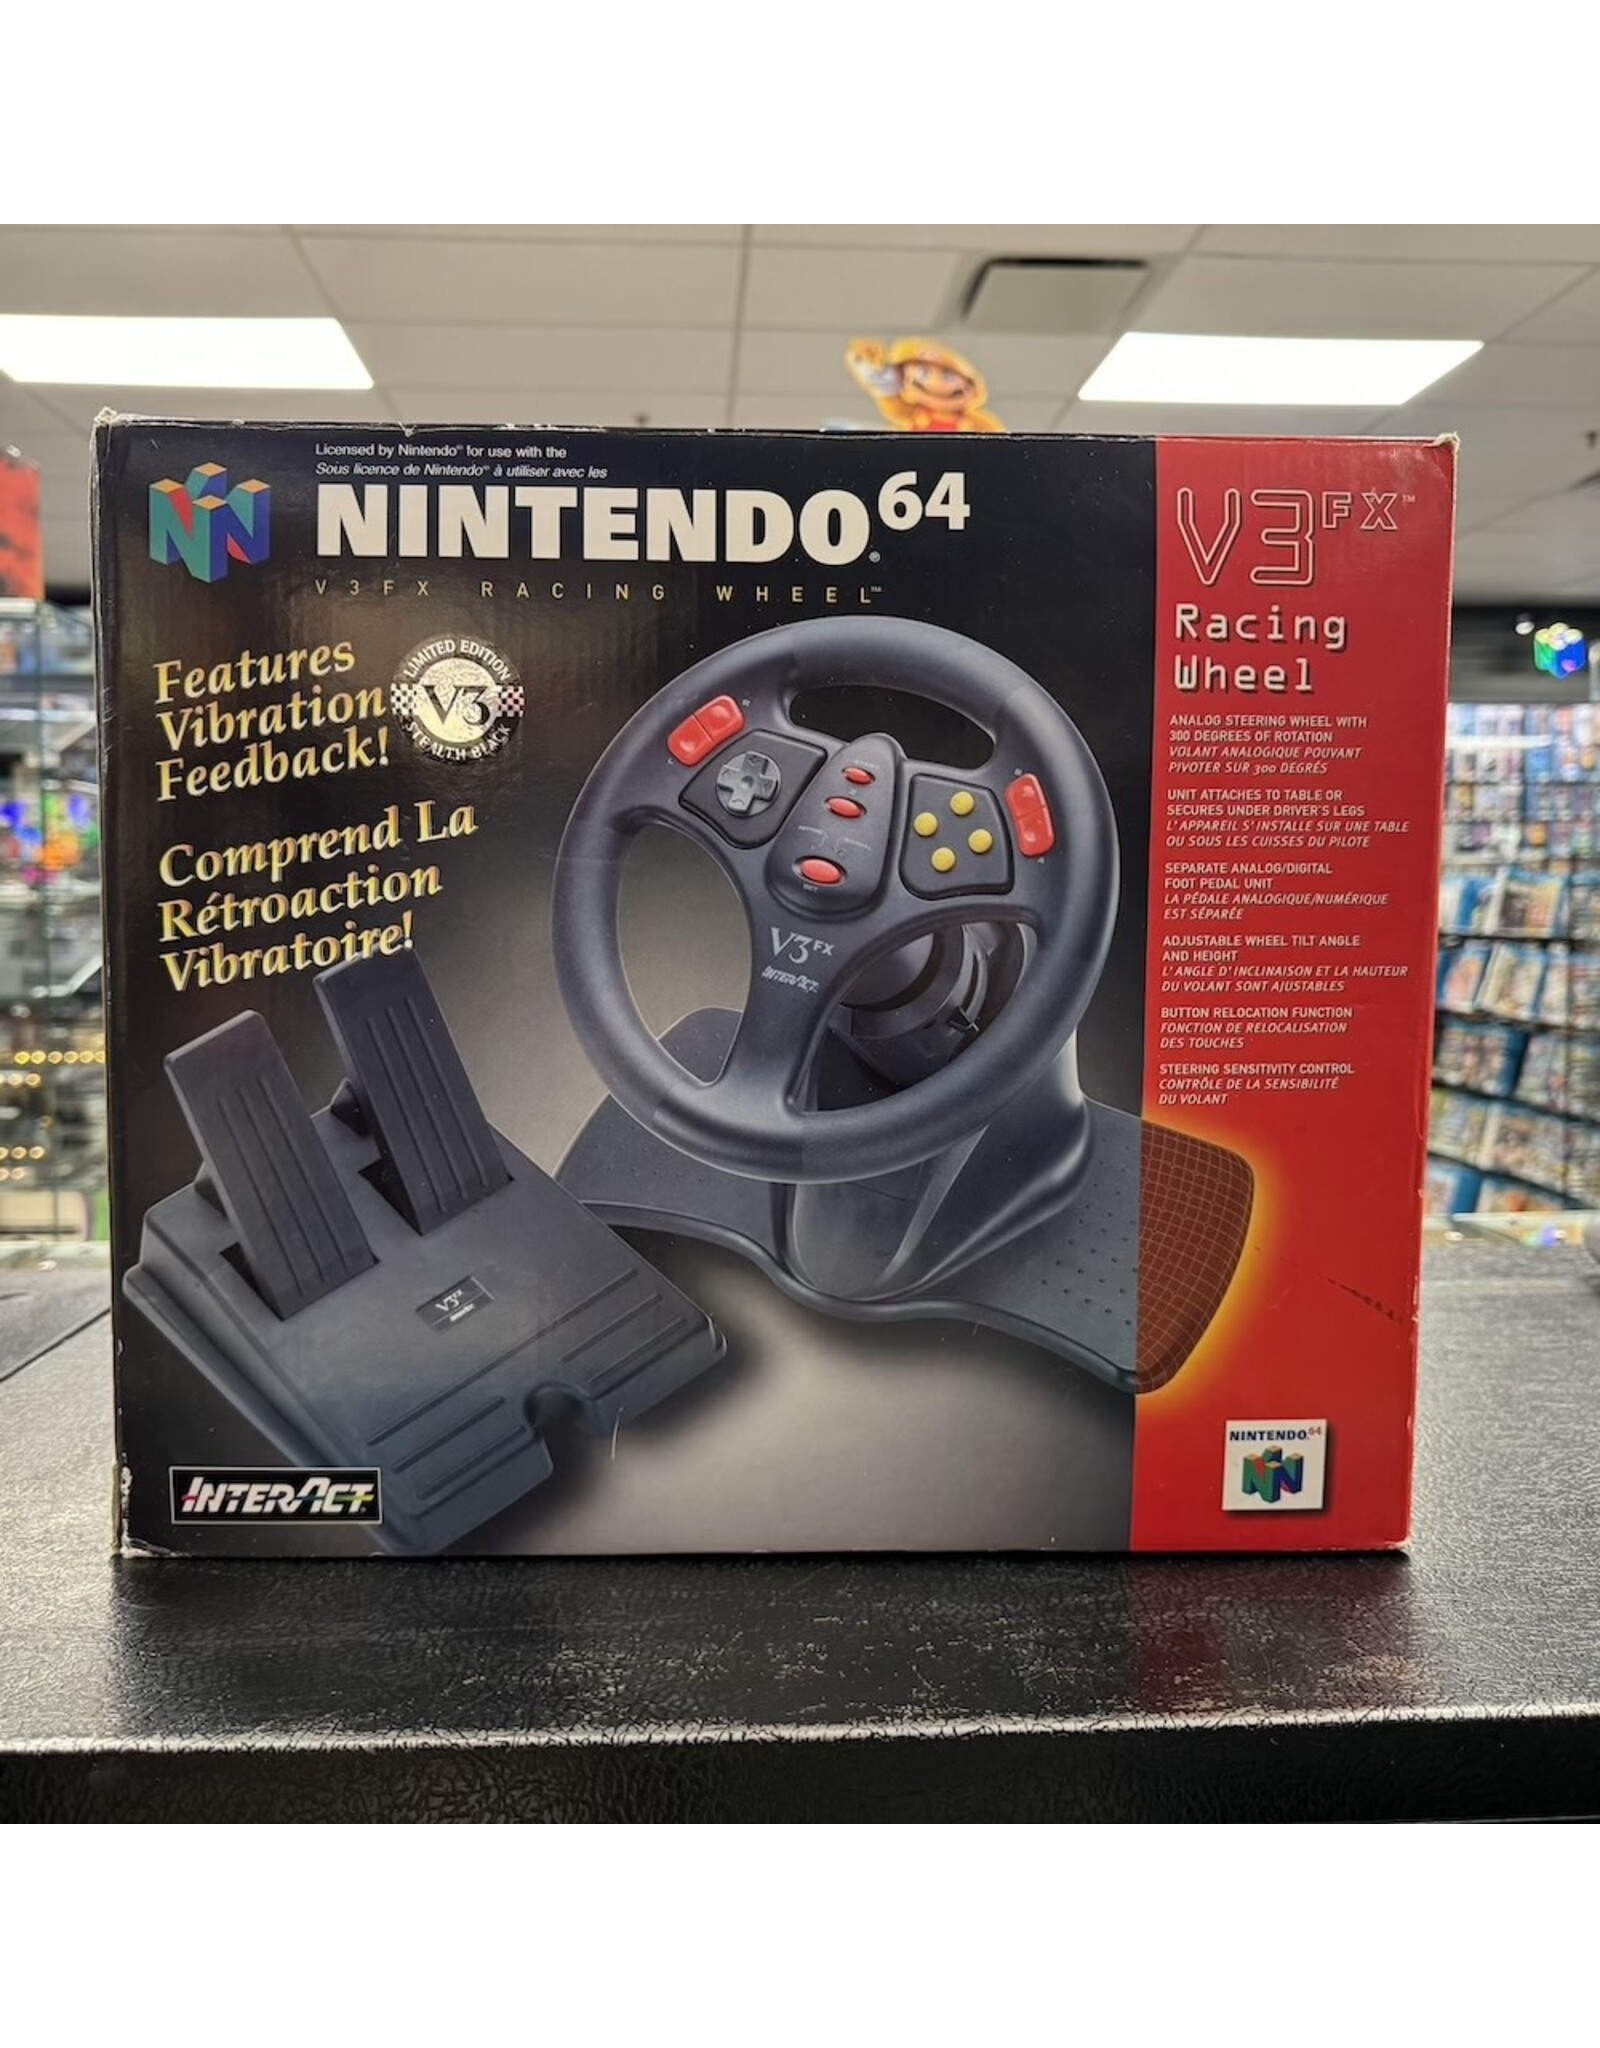 Nintendo 64 N64 Nintendo 64 V3FX Racing Wheel (Boxed, No Manual)